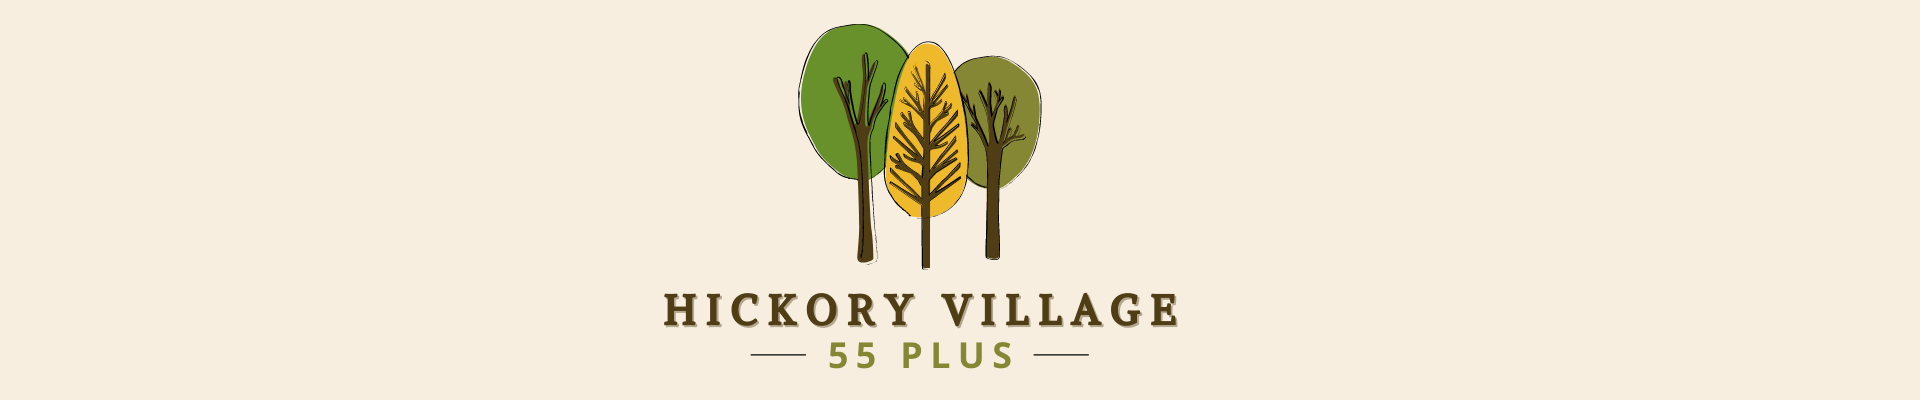 Hickory Village 55 Plus